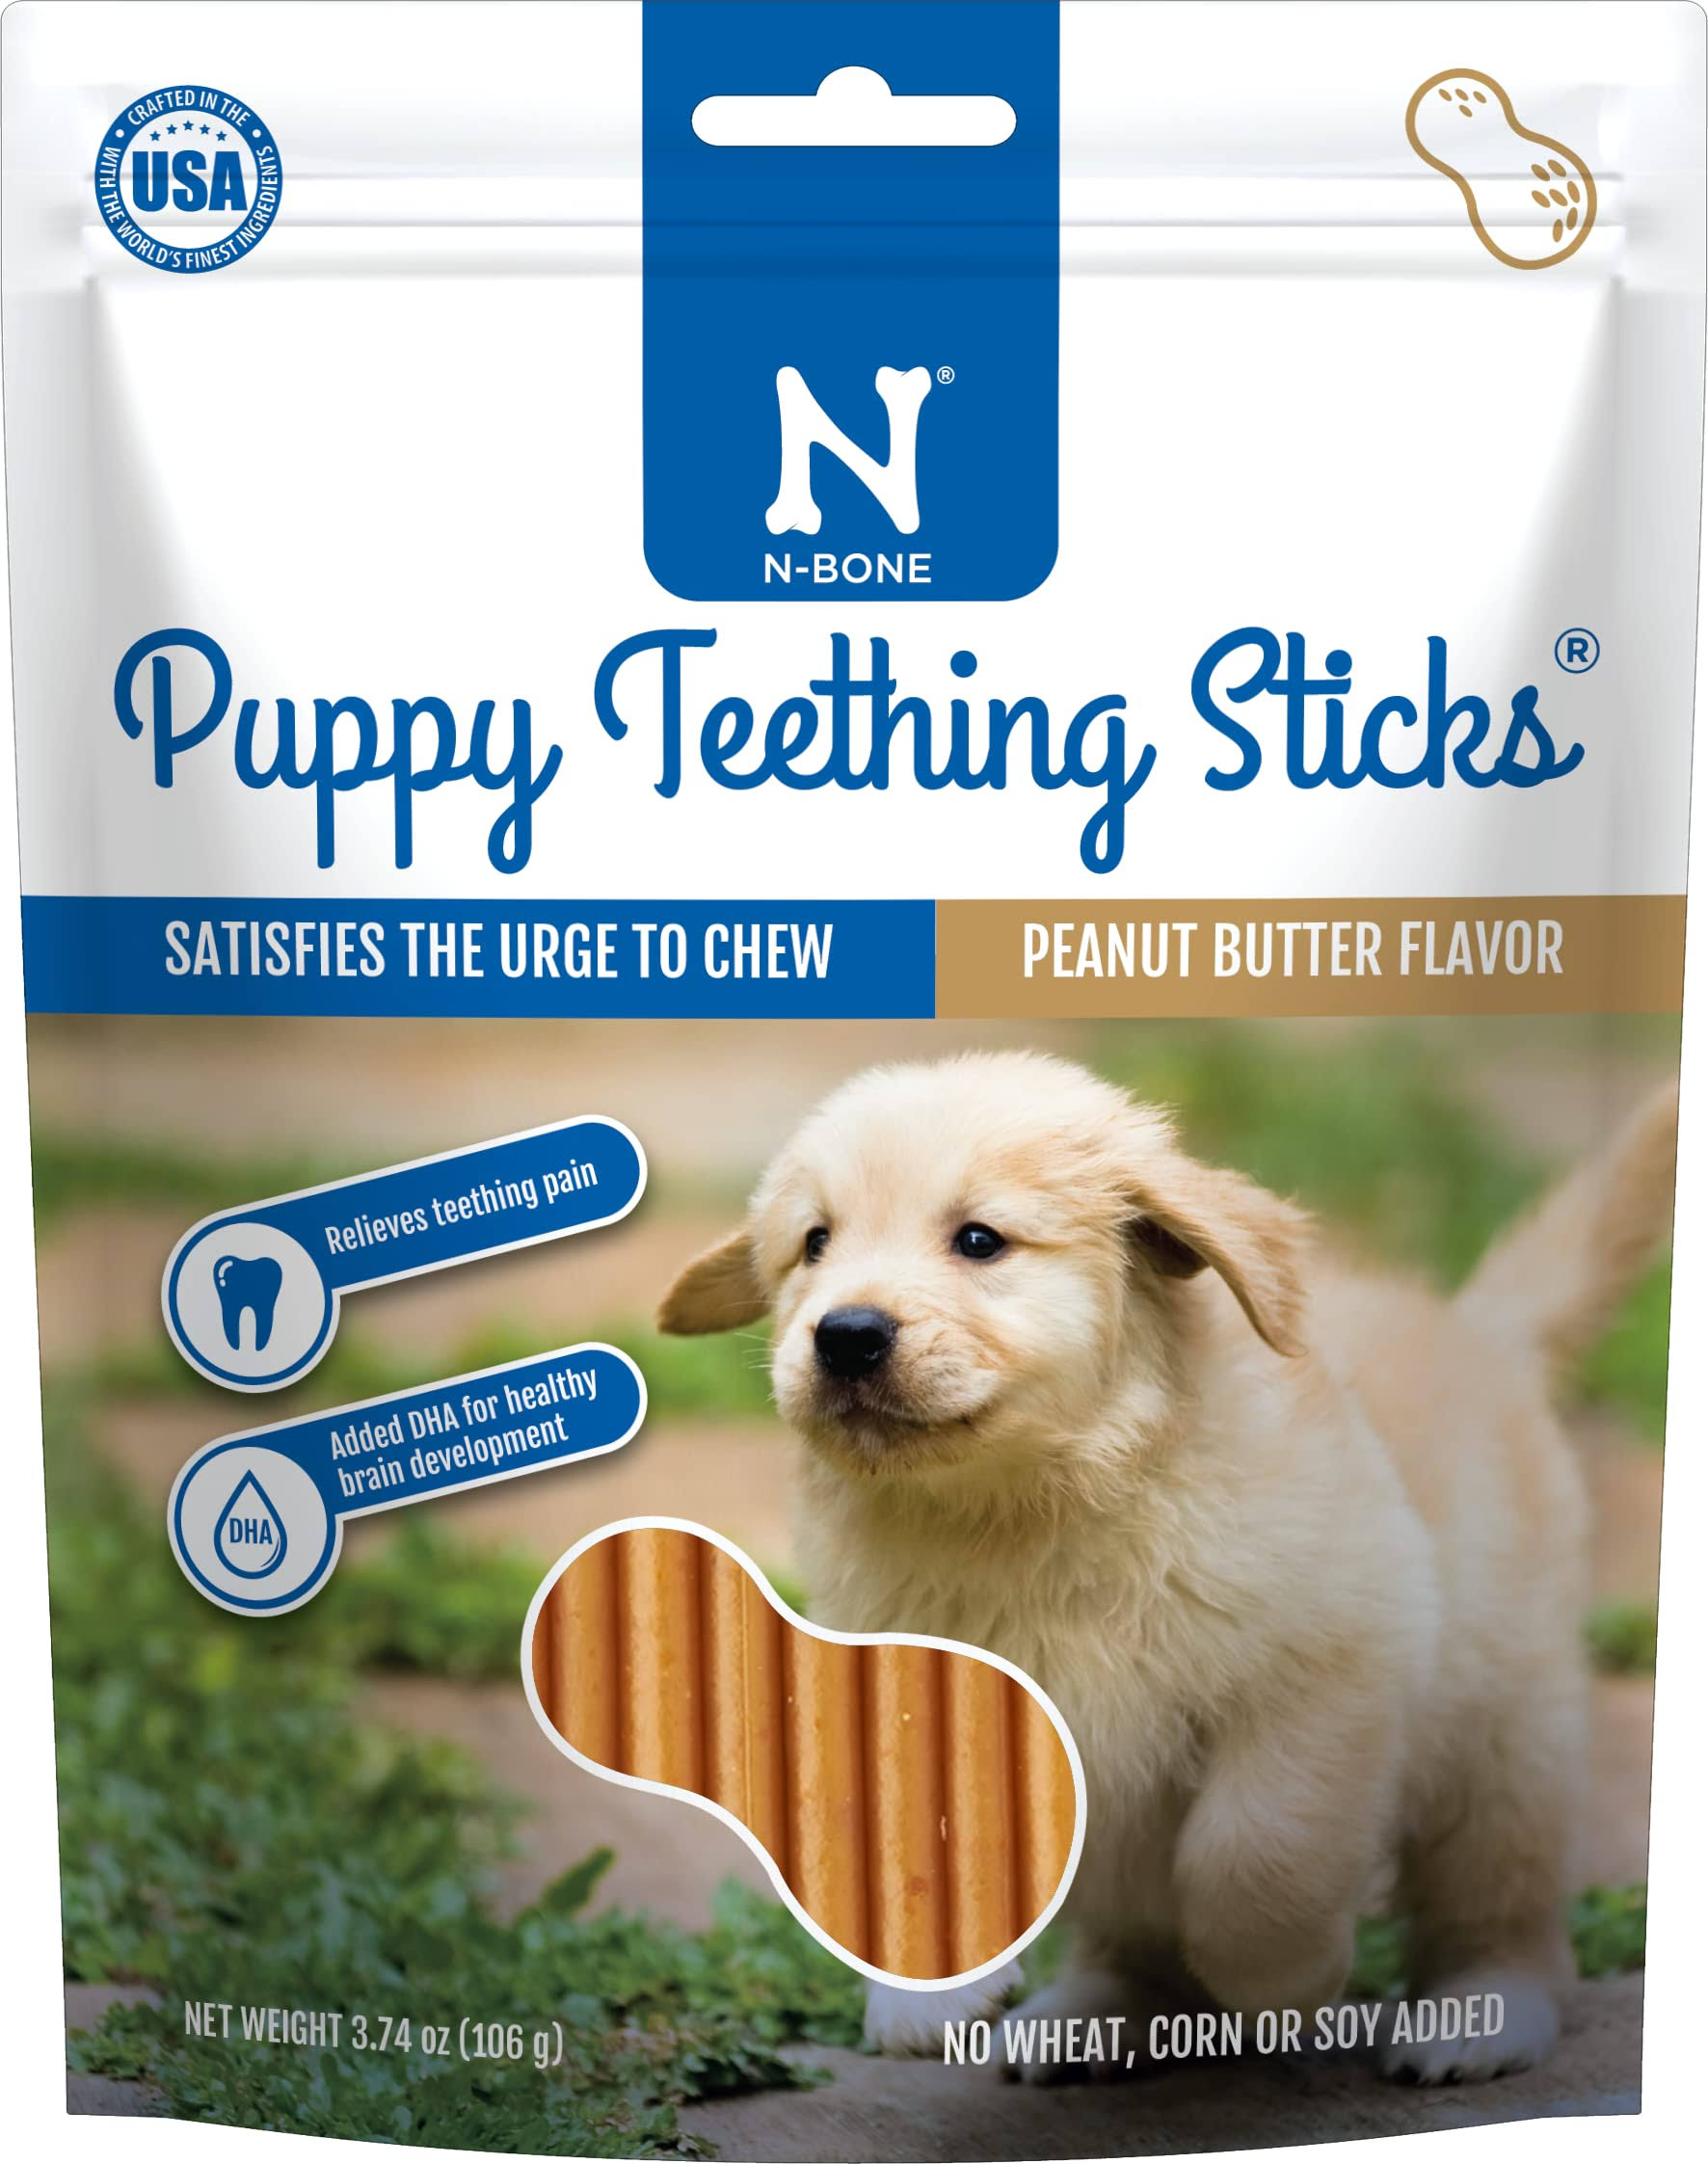 N-Bone Puppy Teething Sticks Peanut Butter Flavor, 3.74 oz, 1 Pouch, Brown